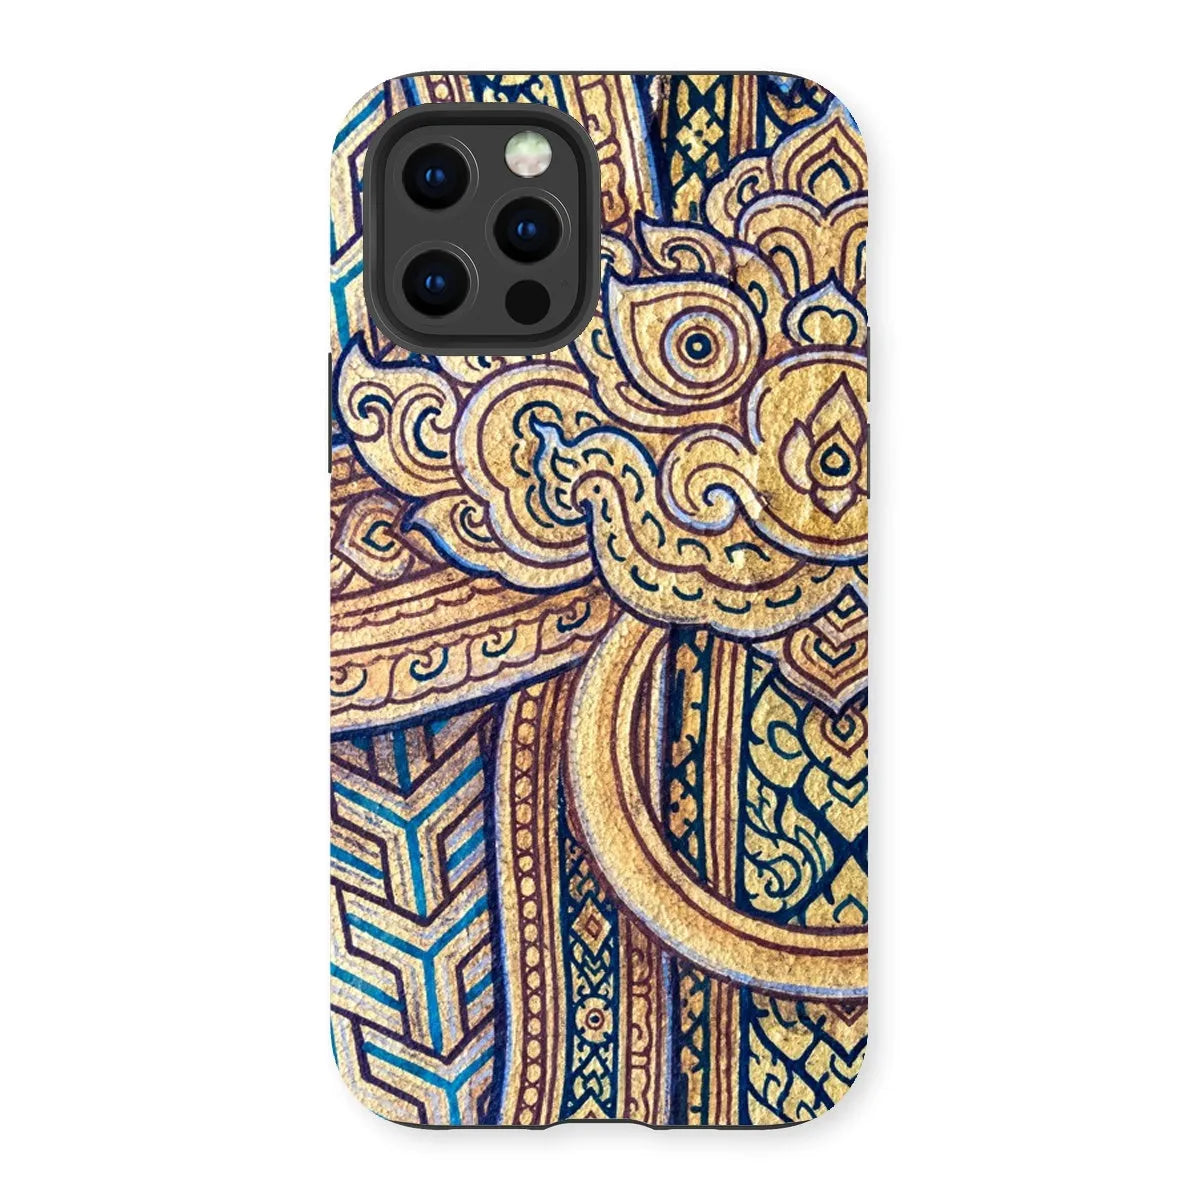 Man’s Best Friend - Thai Aesthetic Art Phone Case - Iphone 13 Pro / Matte - Mobile Phone Cases - Aesthetic Art